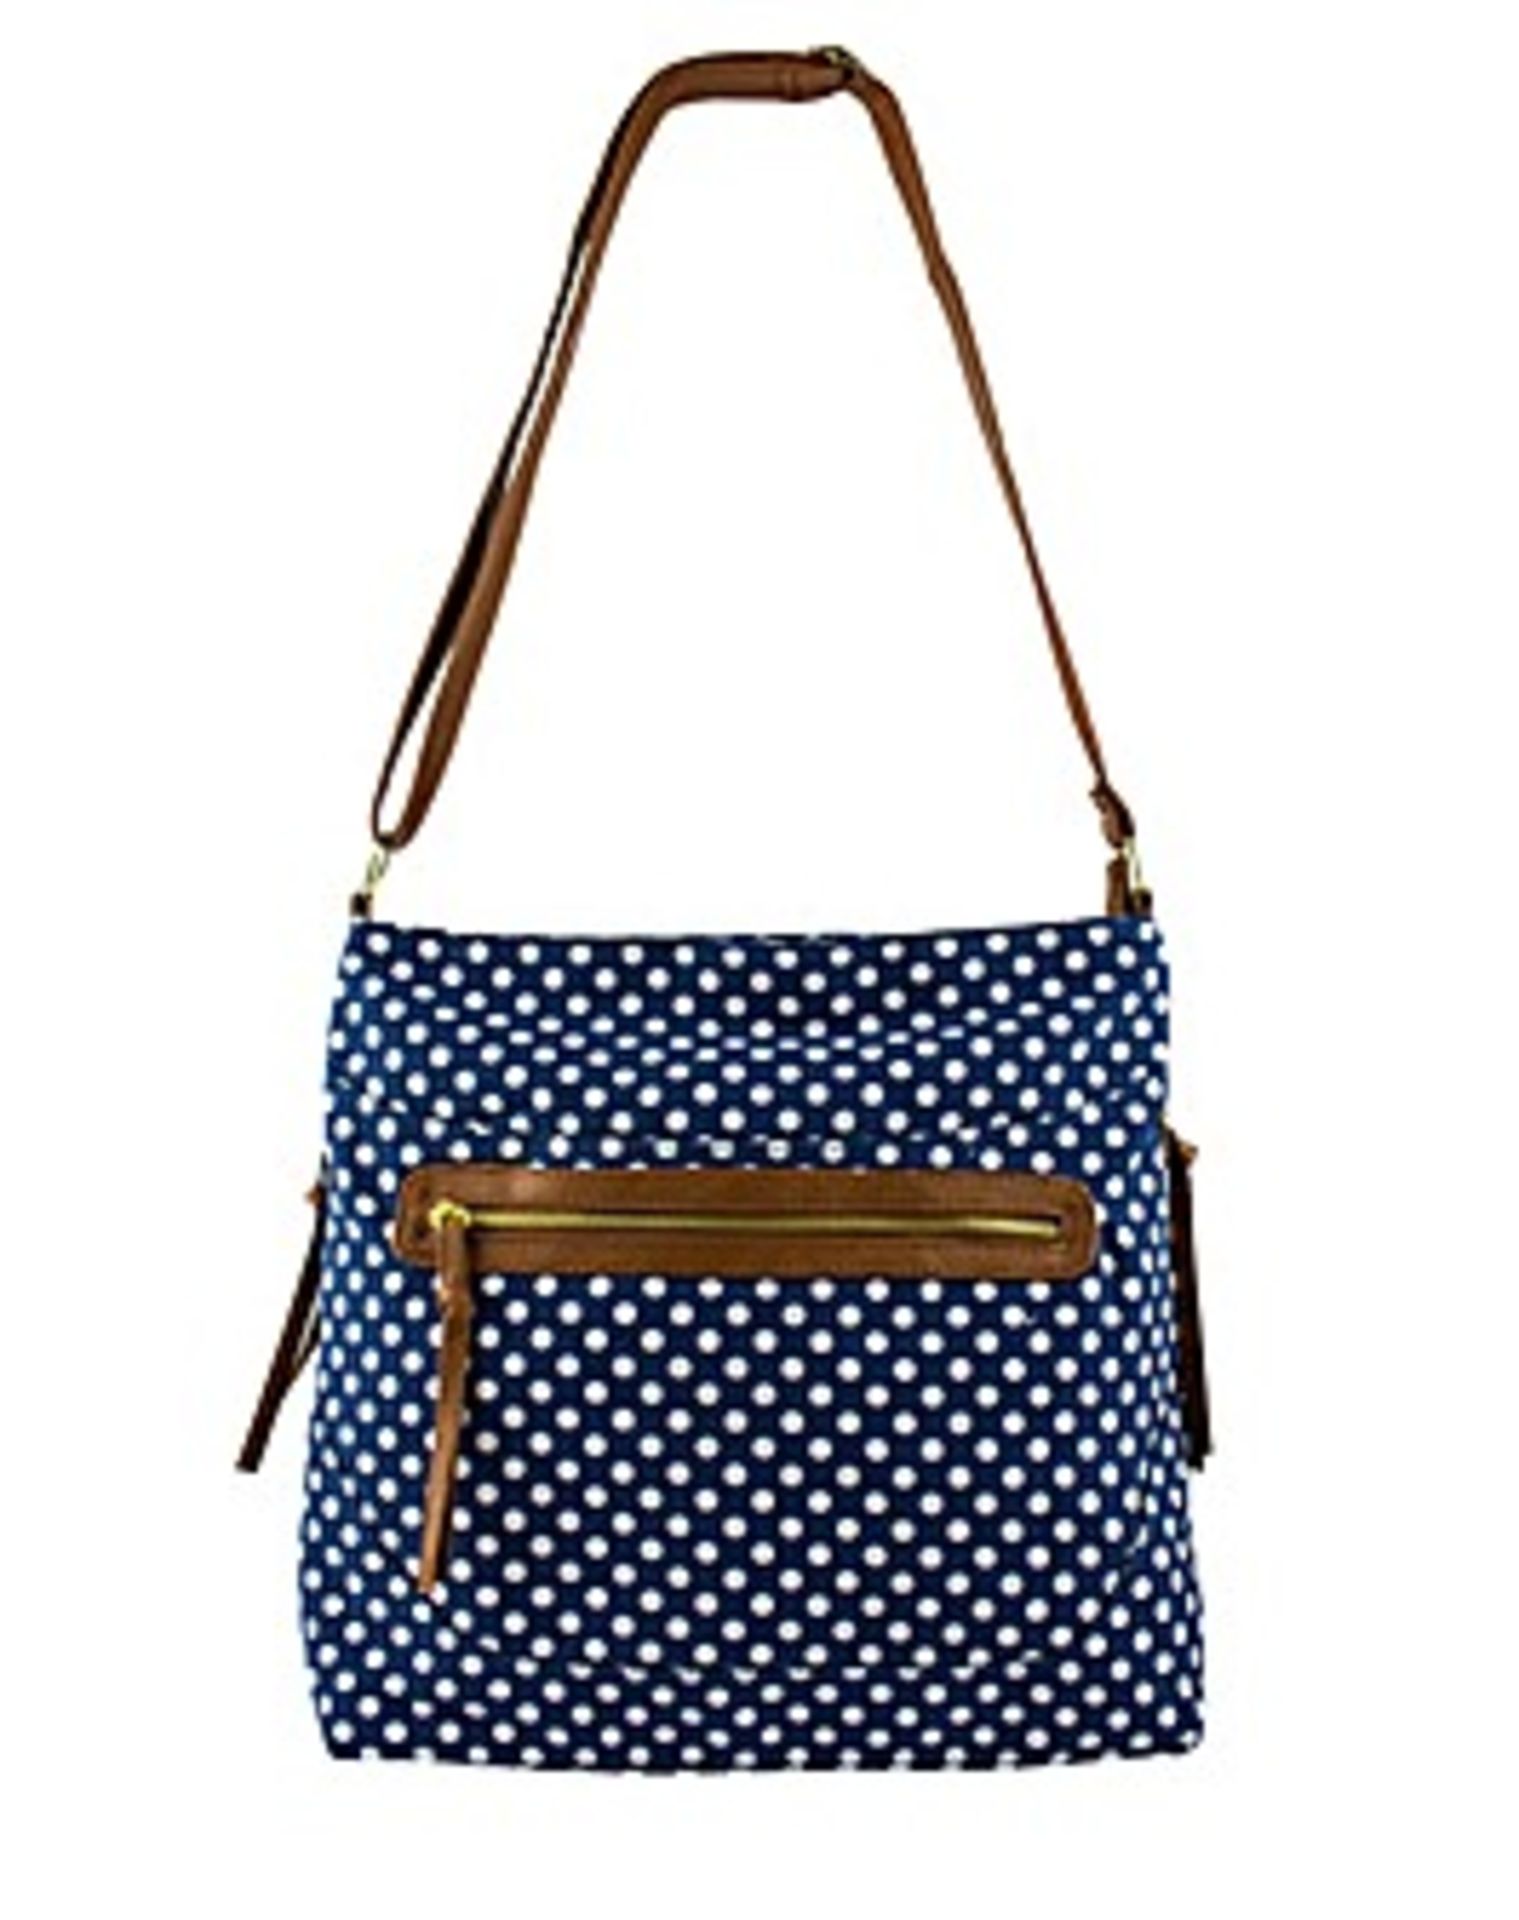 V Brand New Elizabeth Rose Shopper Bag Polka Dot Navy/White With Brown Straps - Zip Pocket X 2